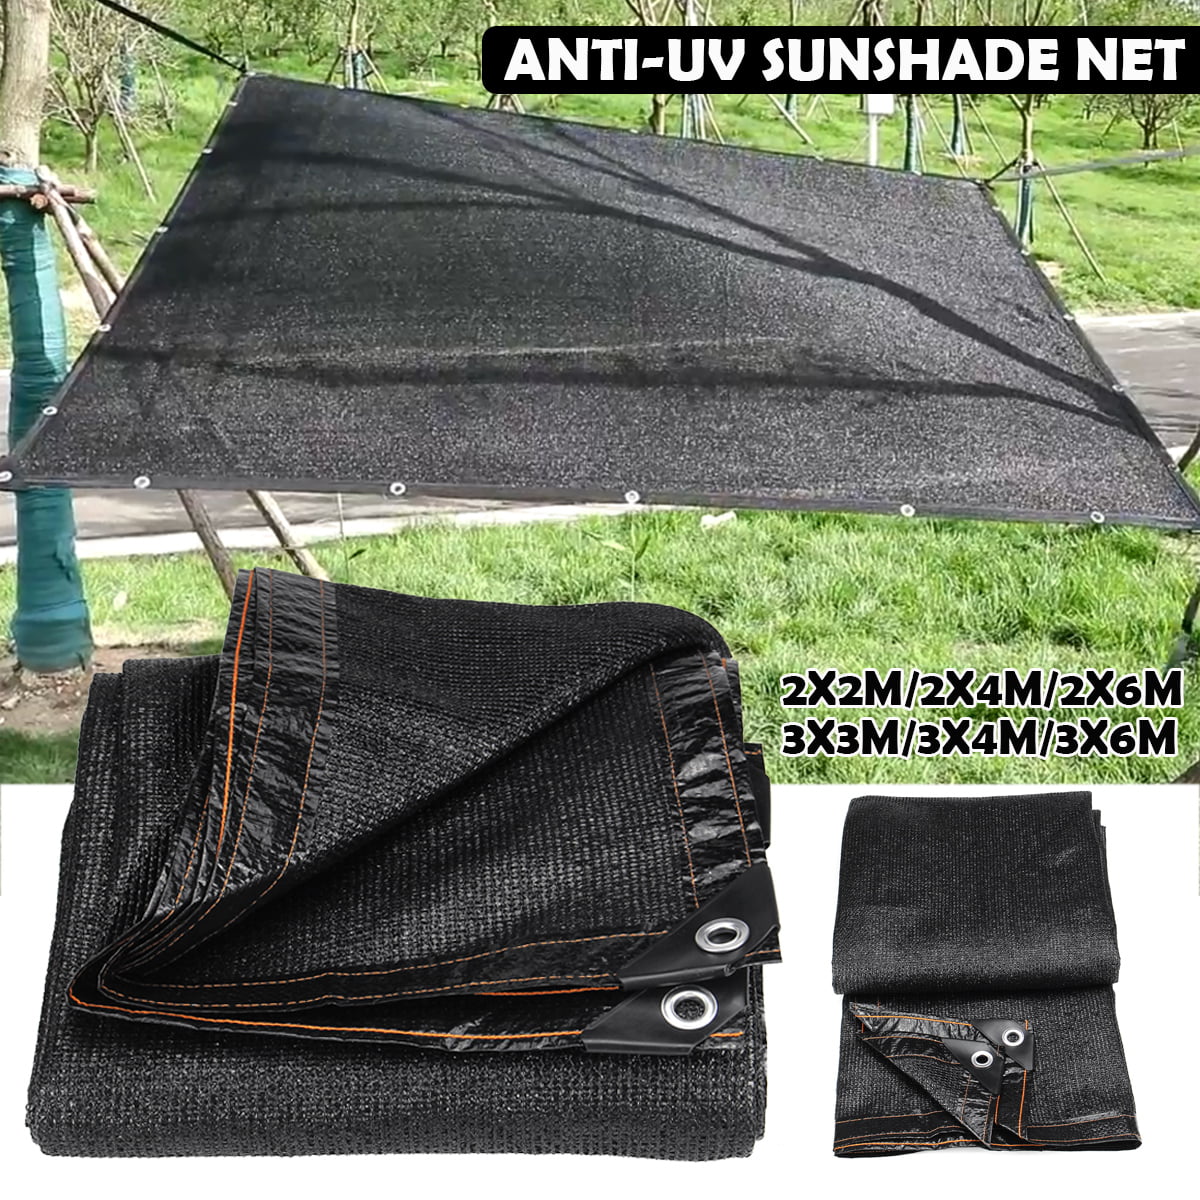 Shelter Black Anti-UV Netting Yard Shading Net Sun Shade Cover Garden Supplies 